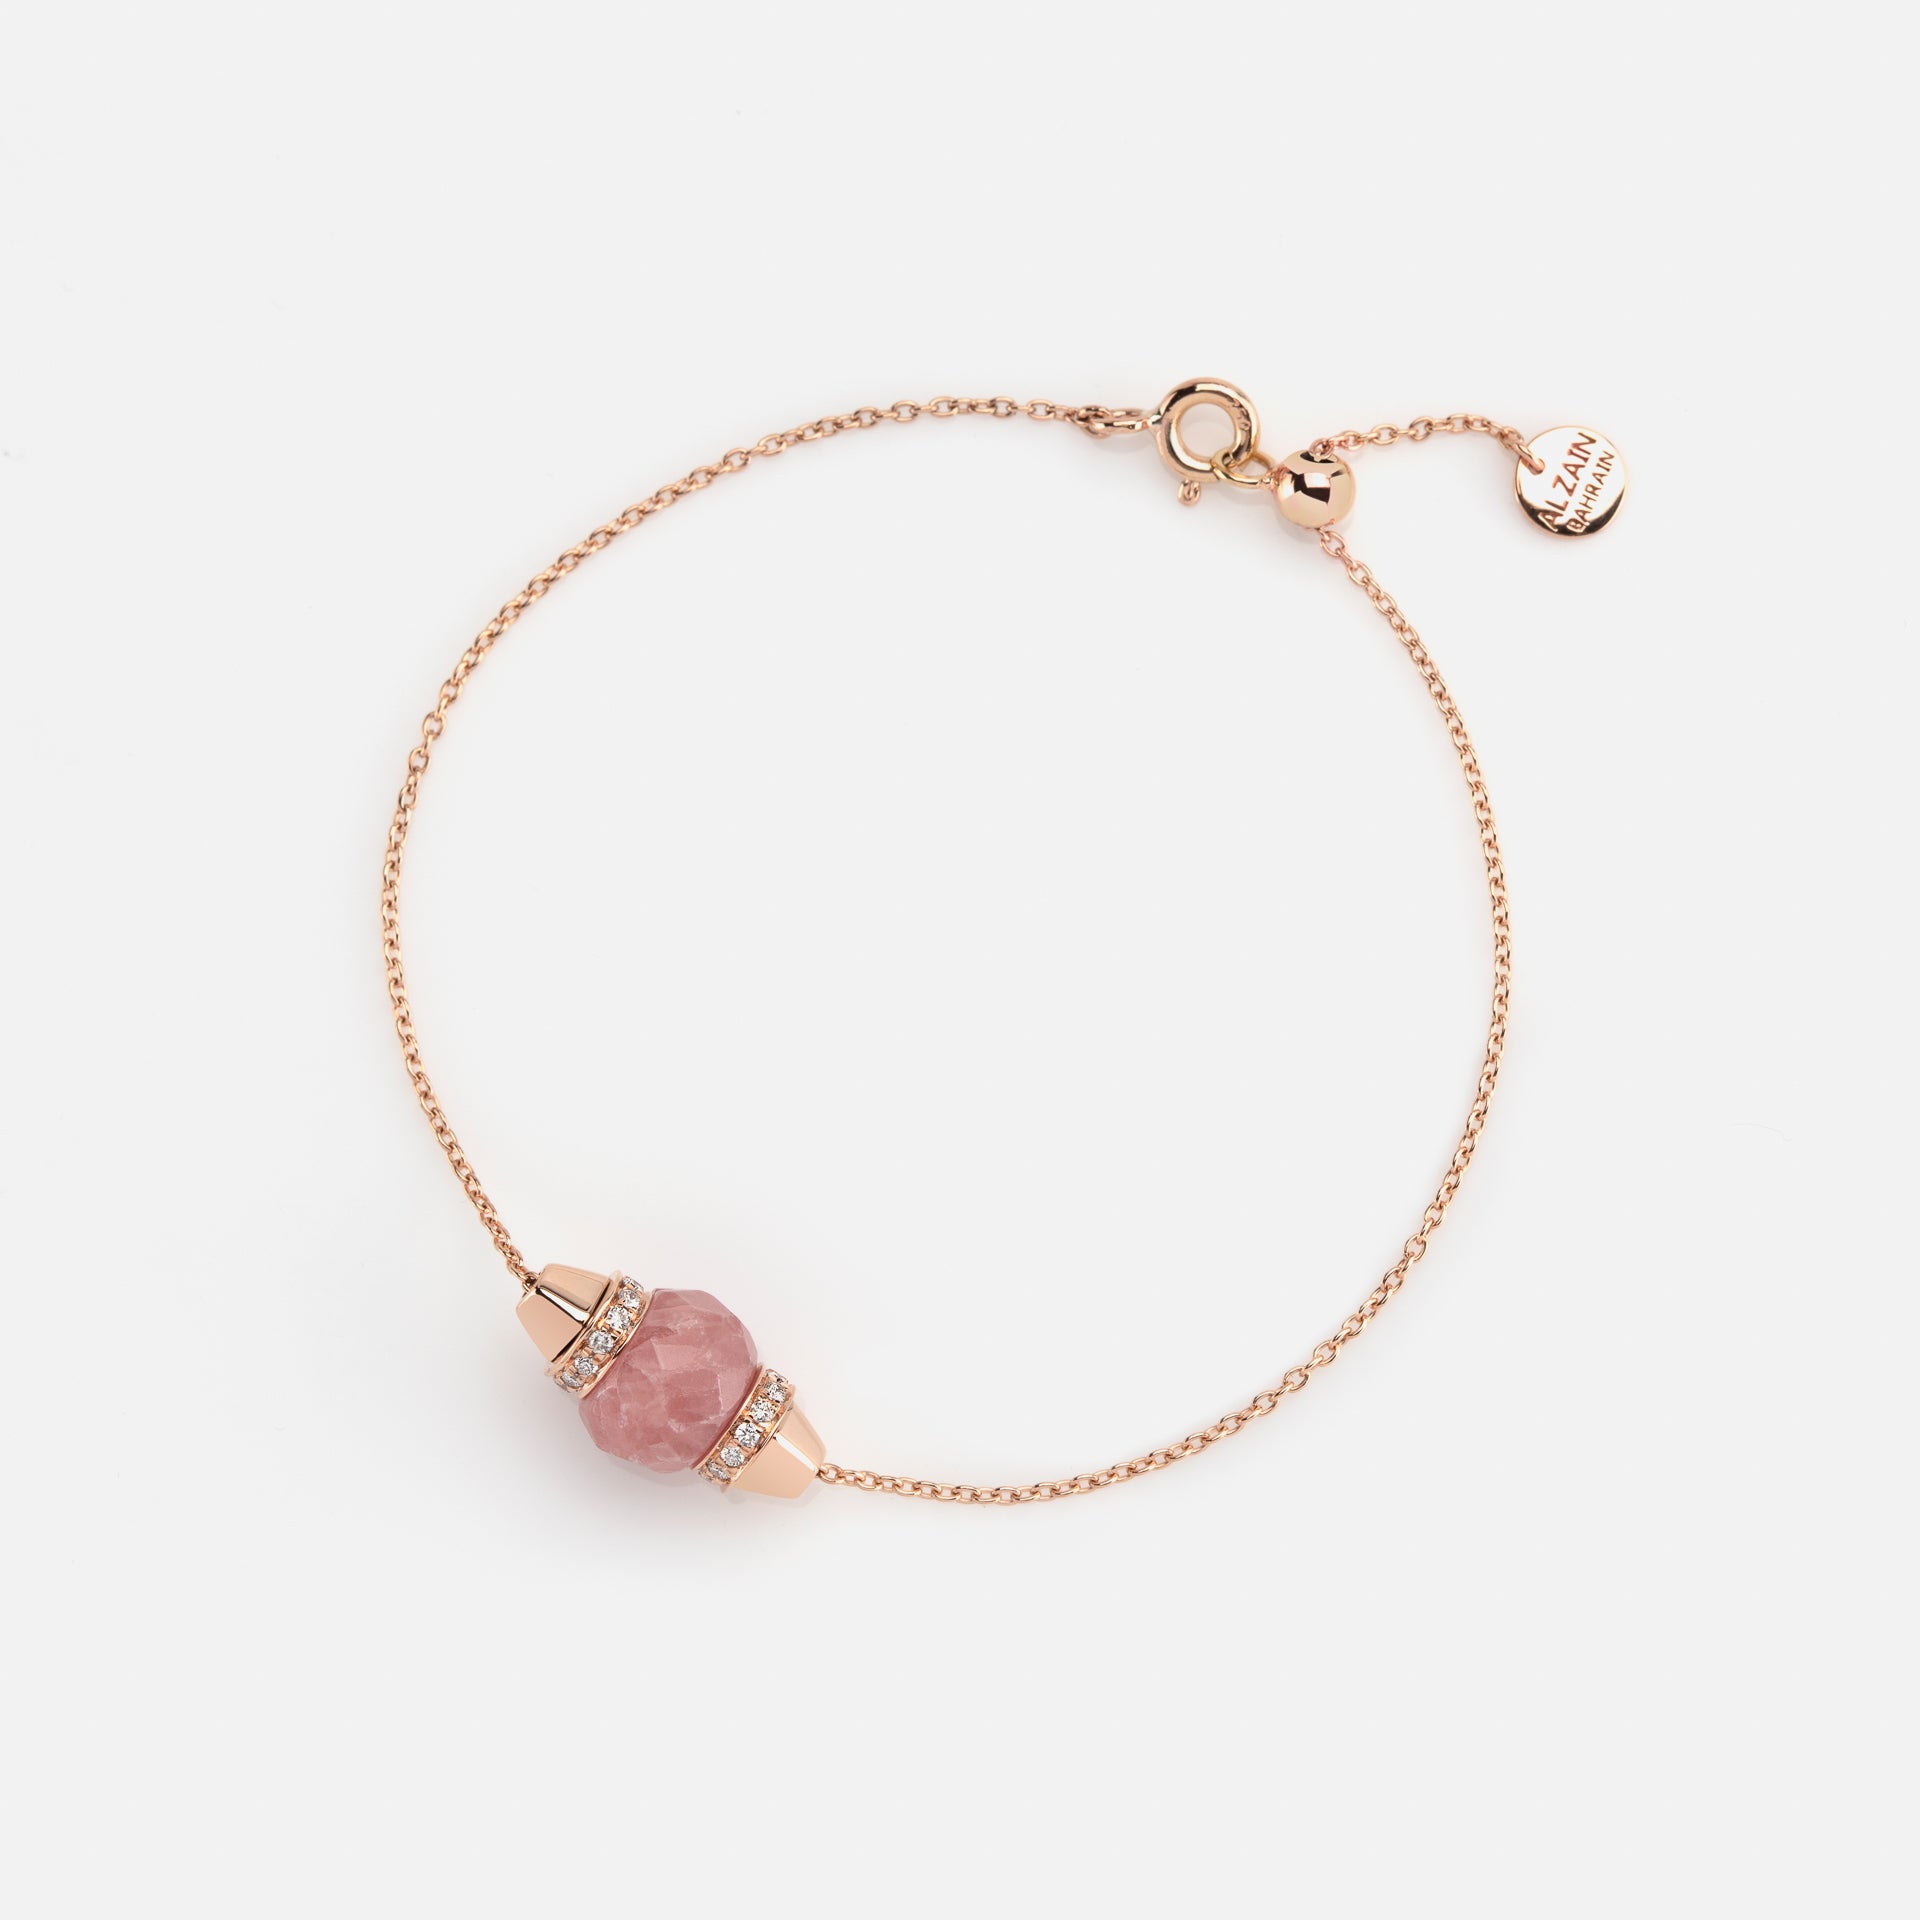 Ruby & Friends Bracelet in Rose Gold with Yamanasate & Diamonds - Al Zain Jewellery